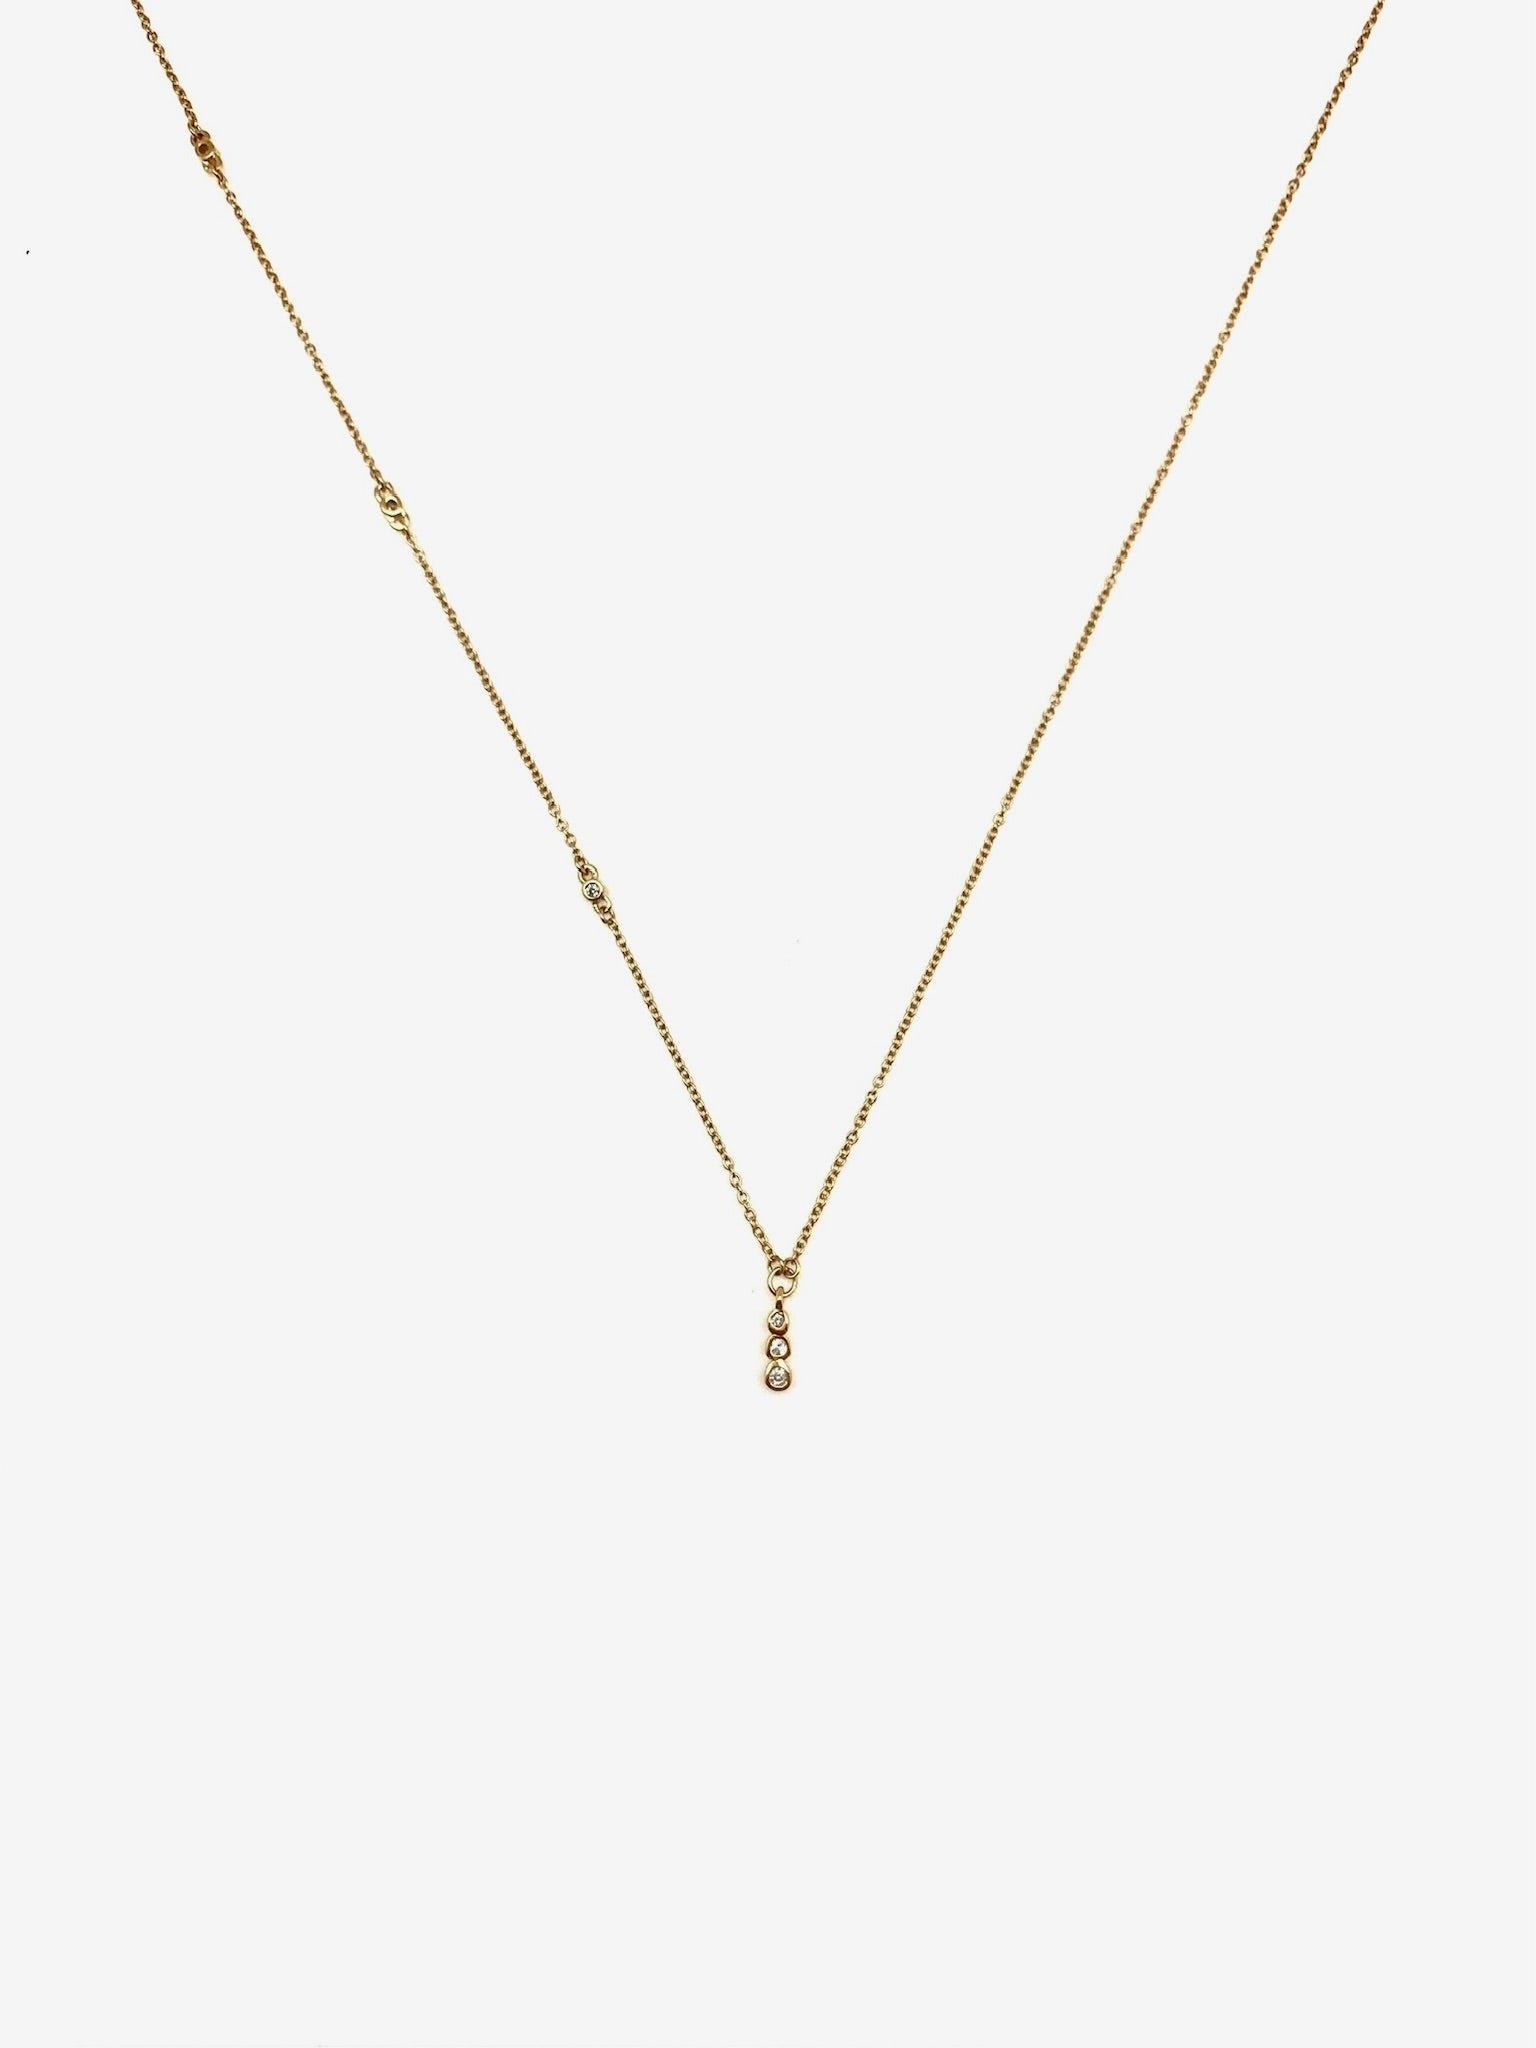 Cleo Diamond Asymmetrical Necklace (14K)